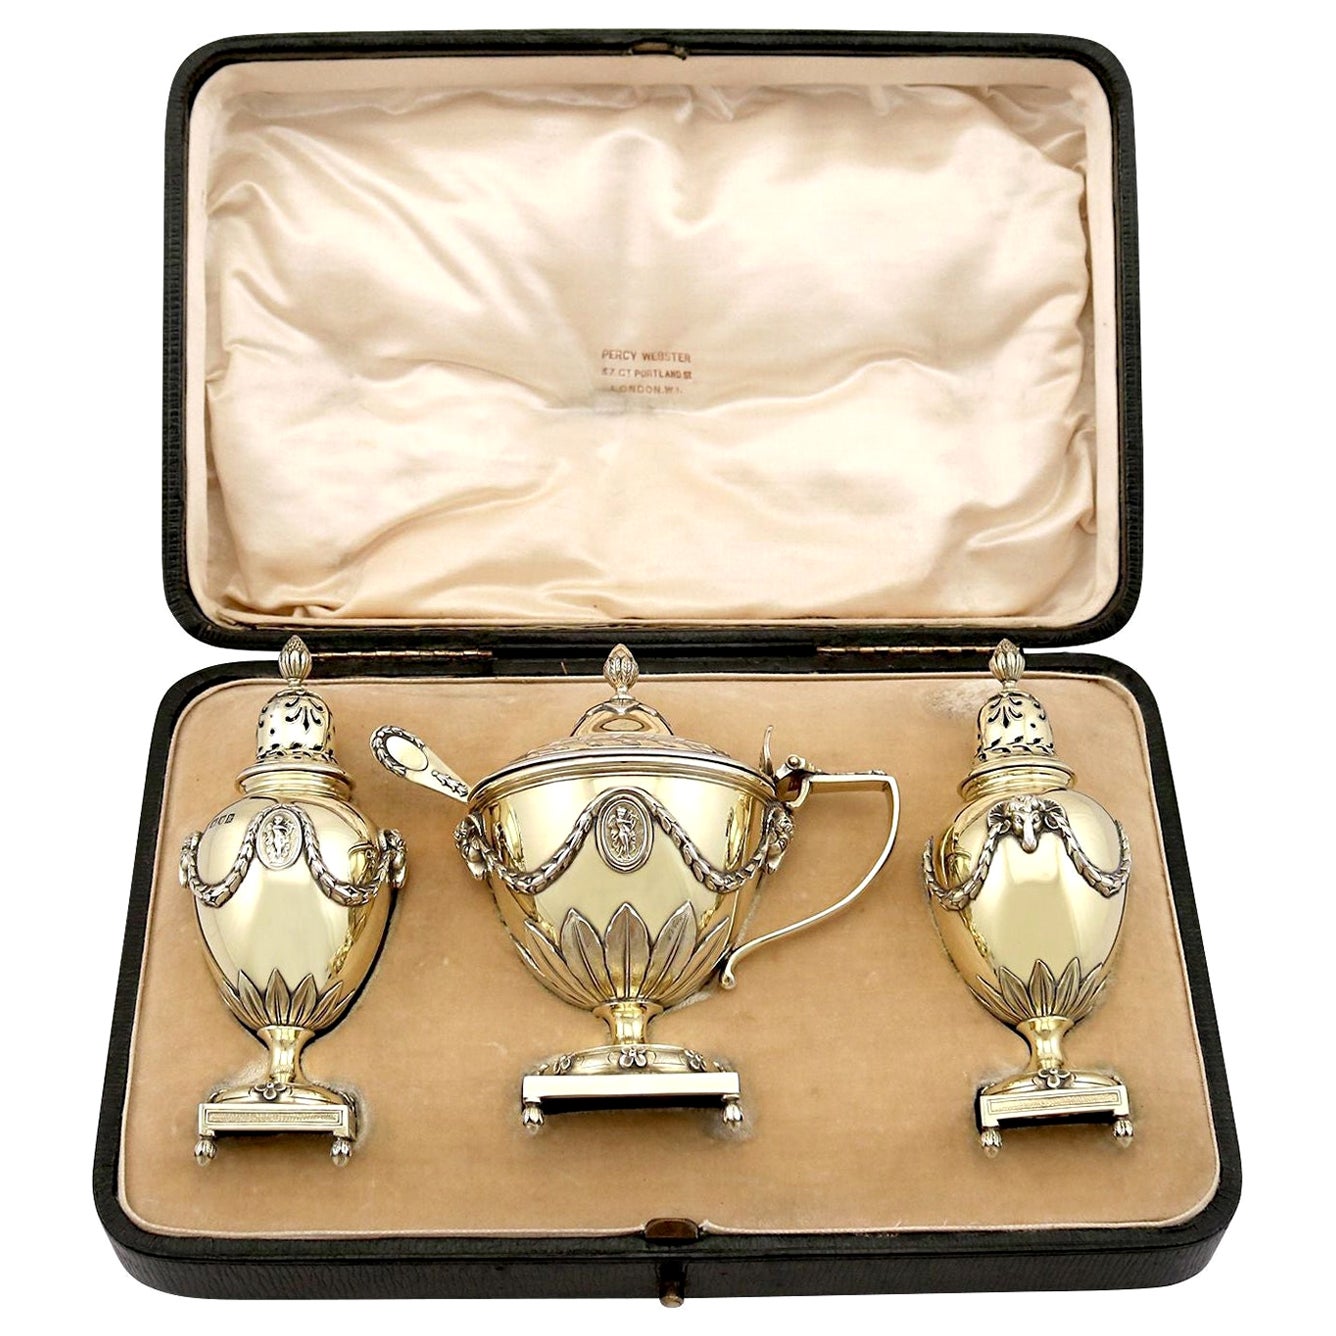 Antique Edwardian Sterling Silver Gilt Condiment Set 1905